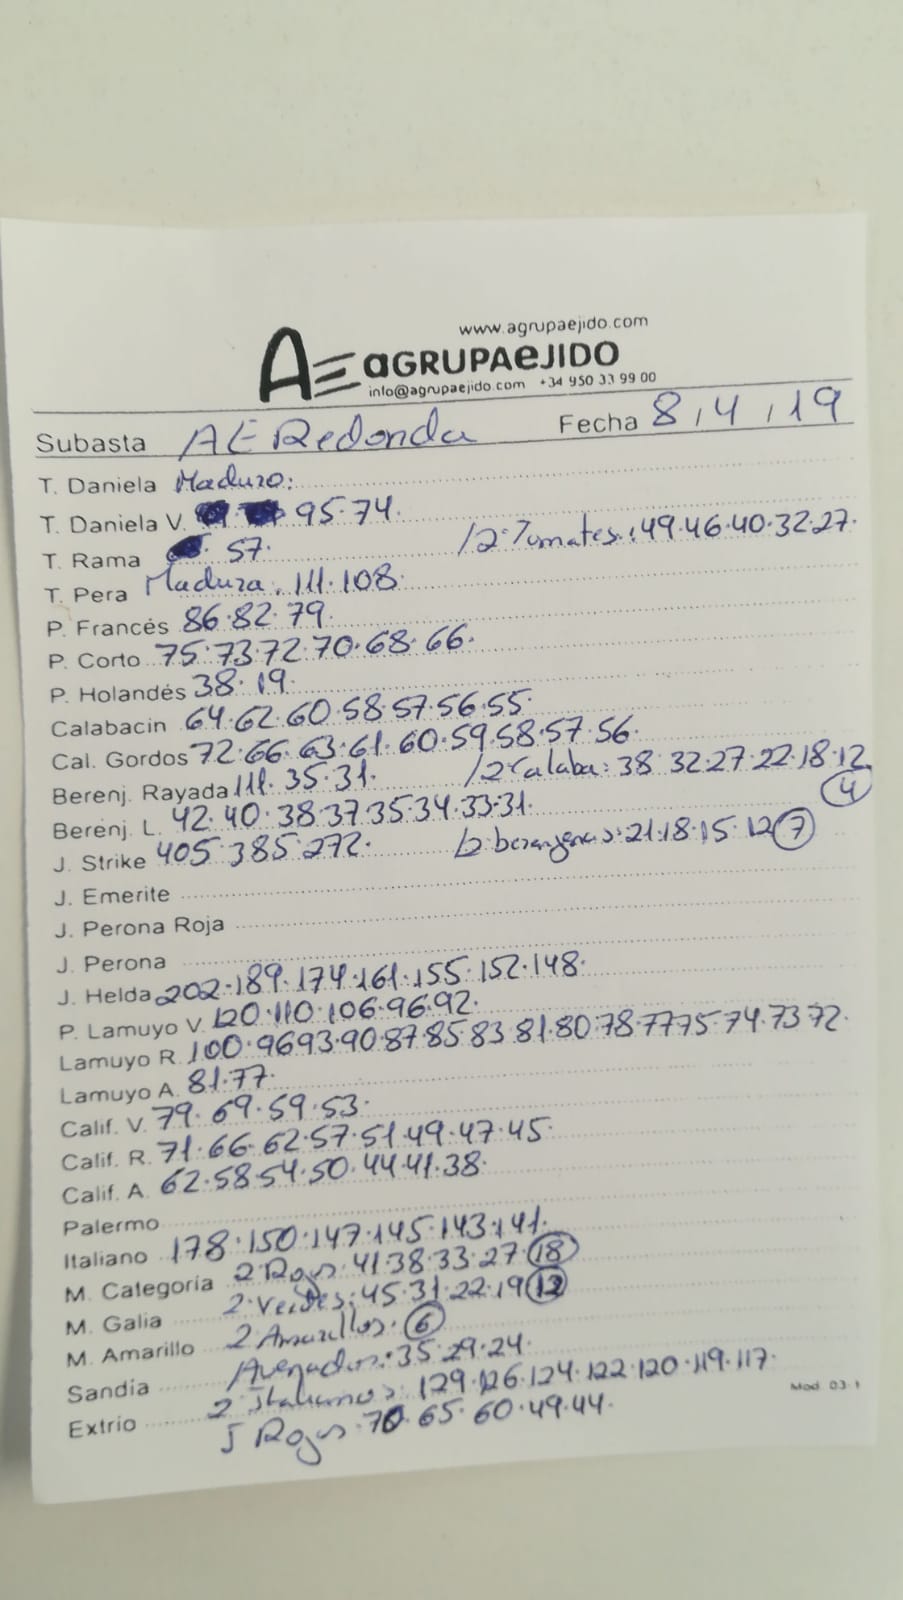 Subasta hortofrutícola AgrupaEjido La Redonda 8 de Abril 2019